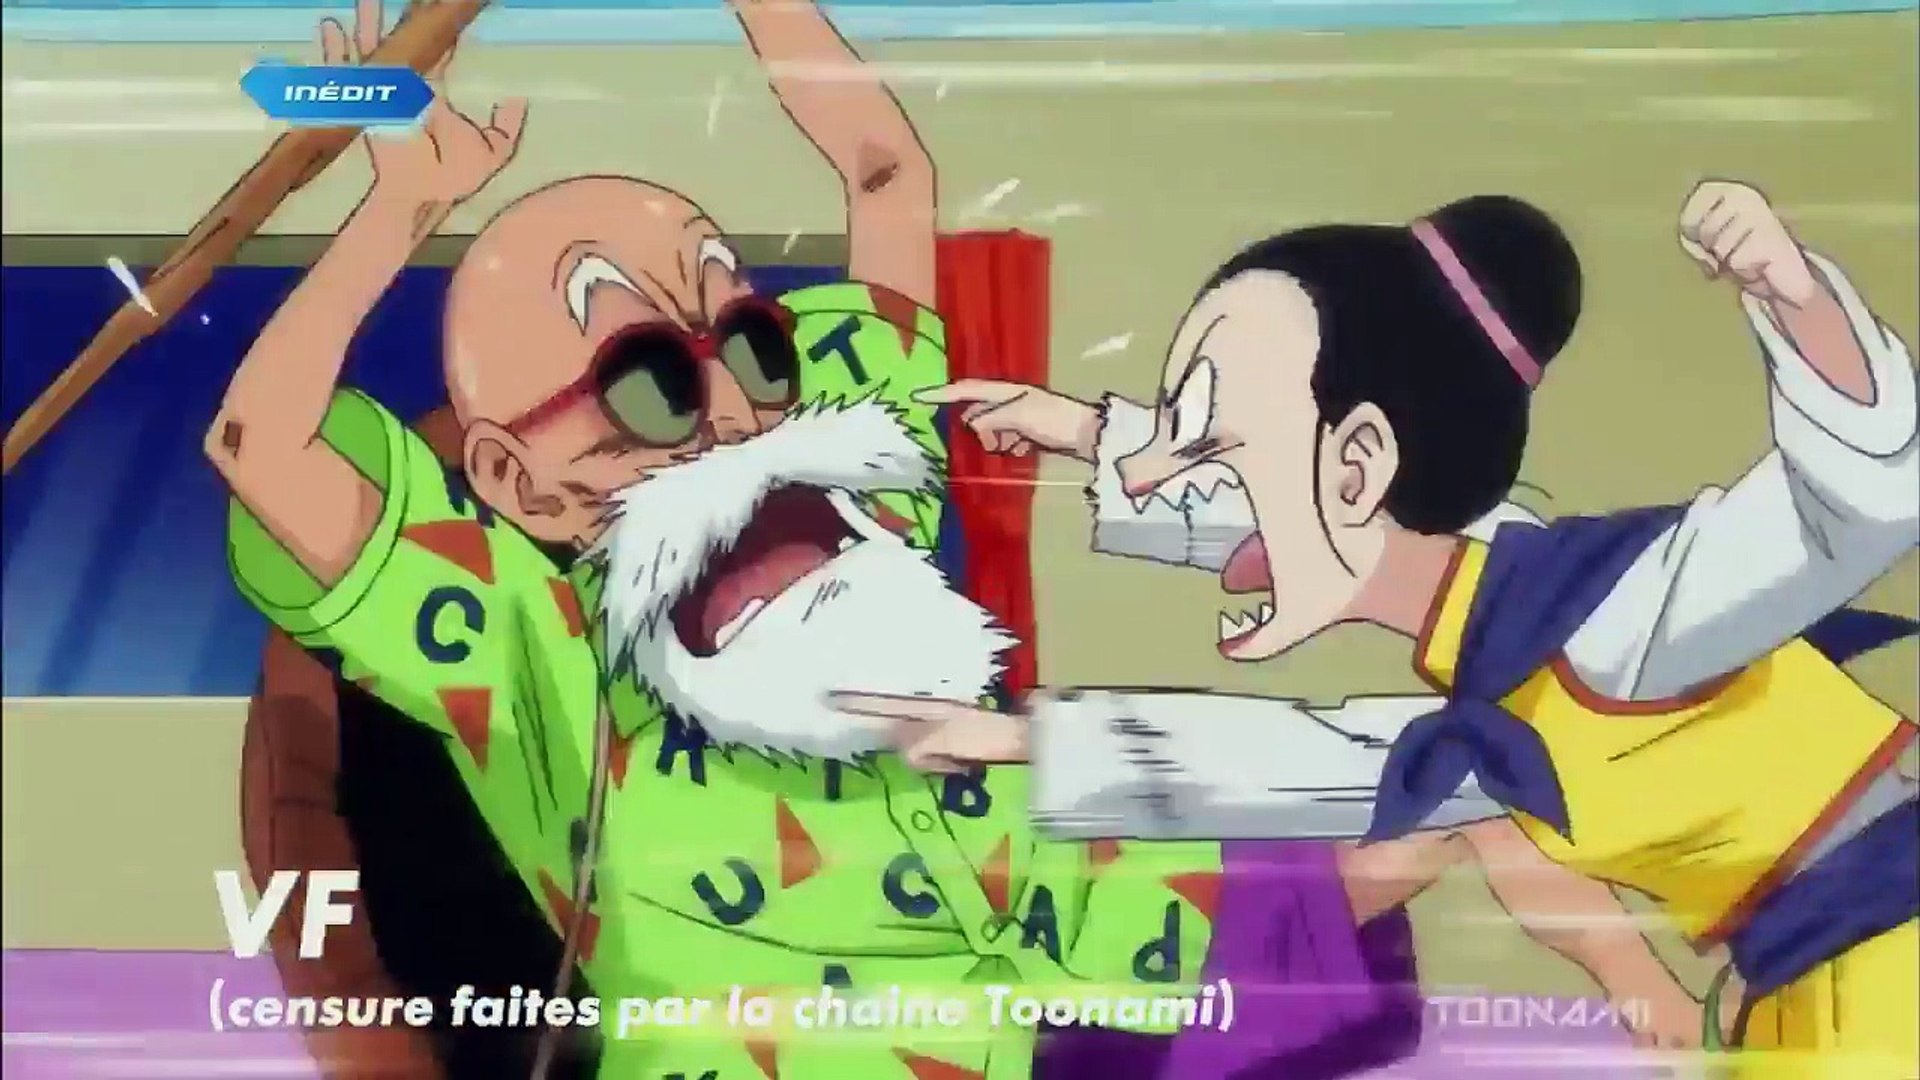 Dragon Ball Super censuré en France - Vidéo Dailymotion